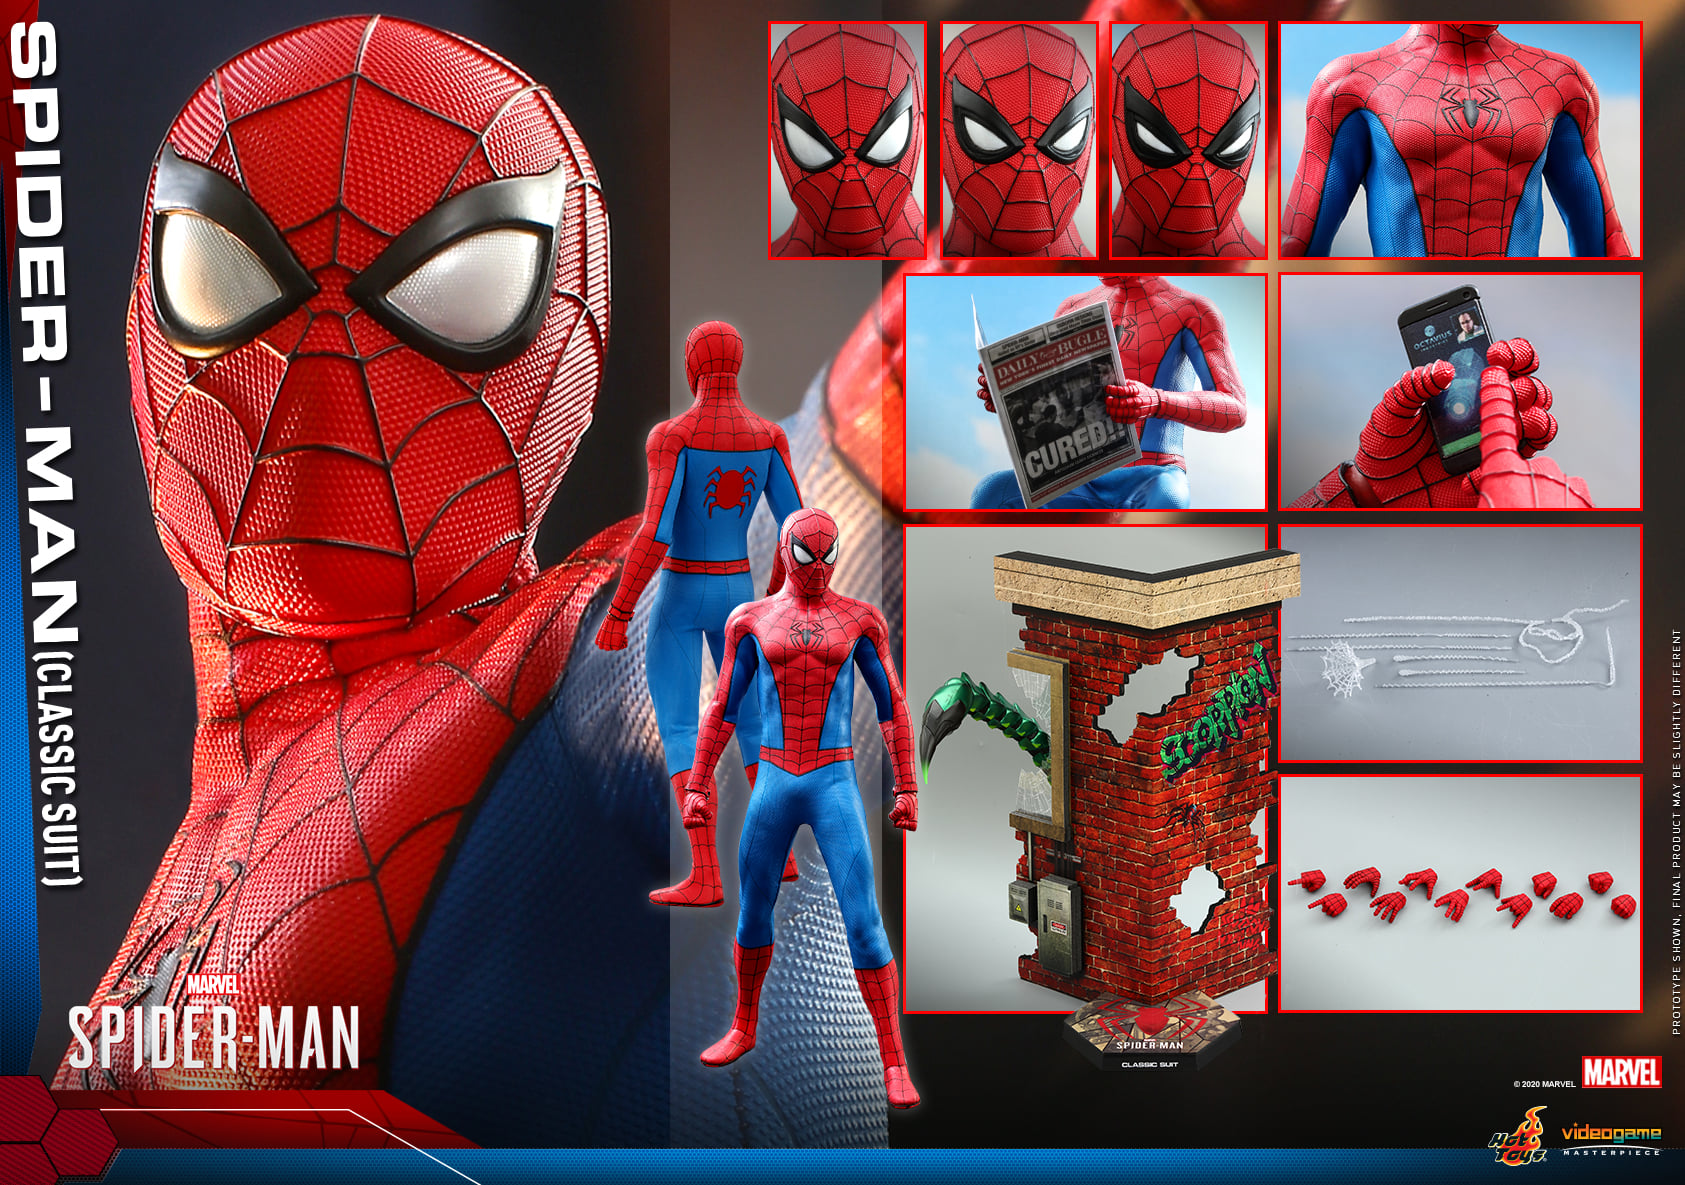 New Marvel's SpiderMan Hot Toys Figure Revealed Just